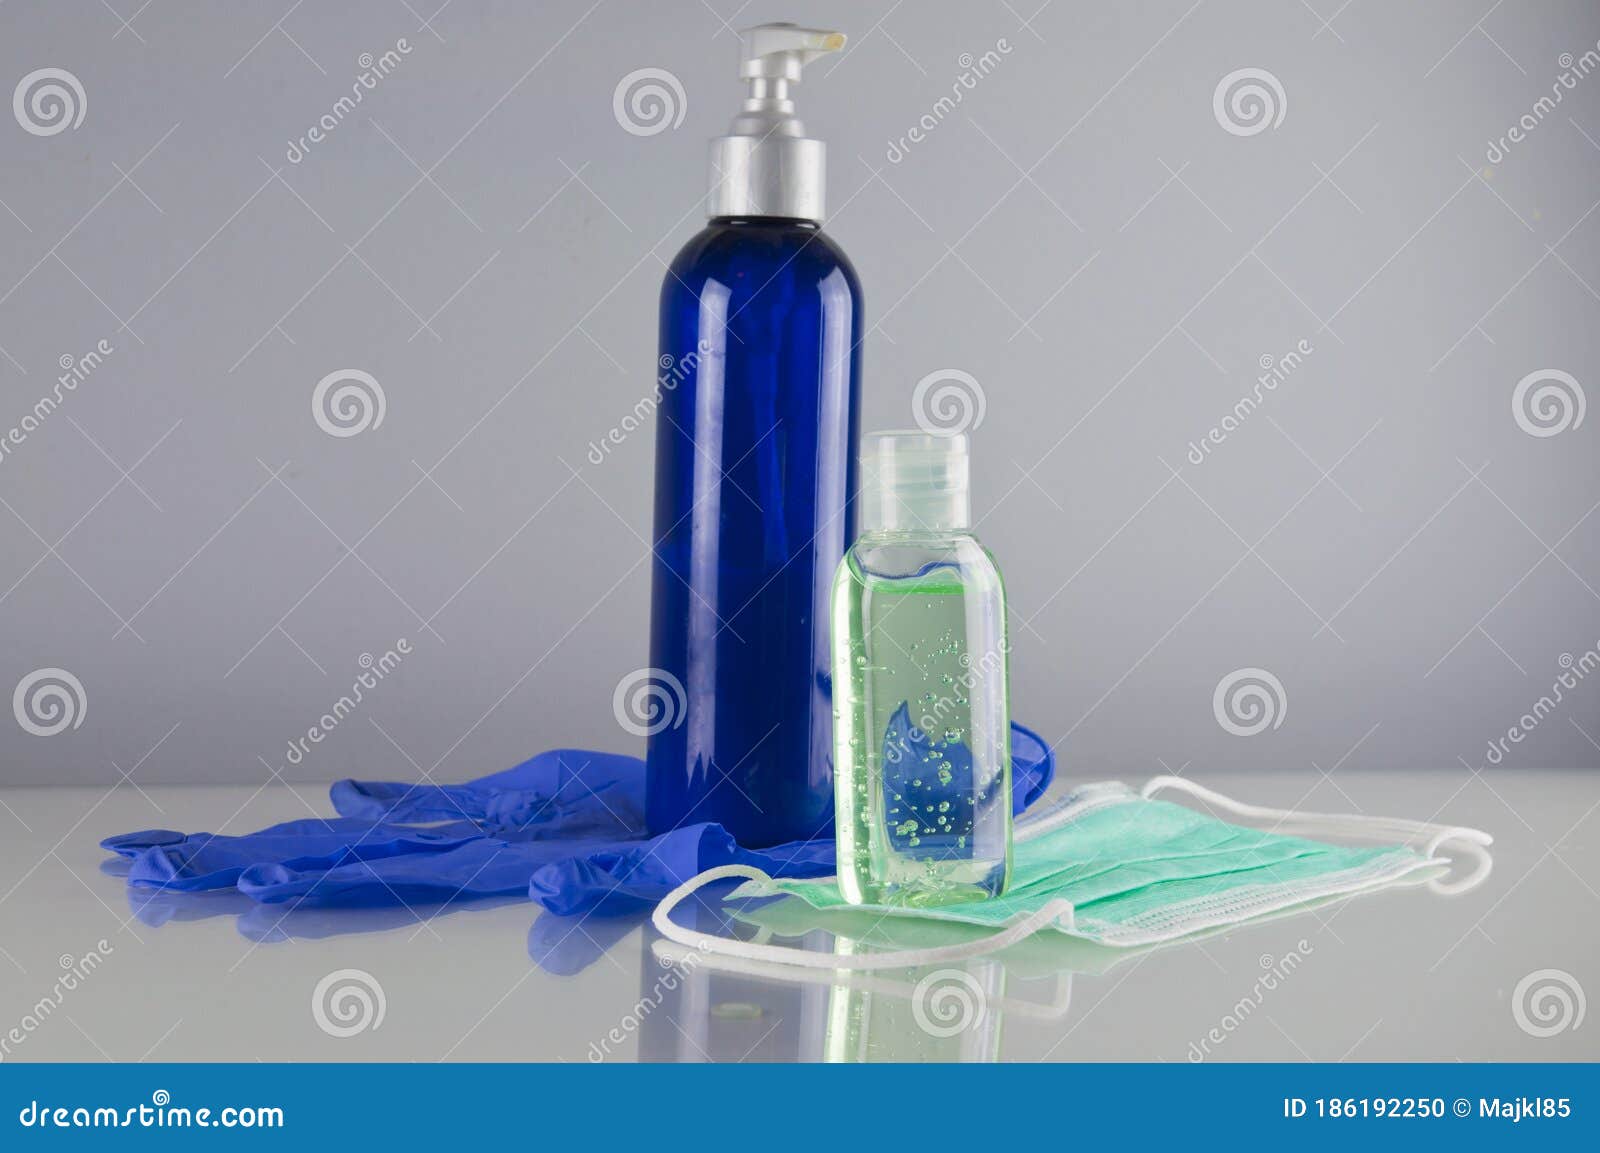 disinfection liquids, face mask and disposable glove - pandemics precaution